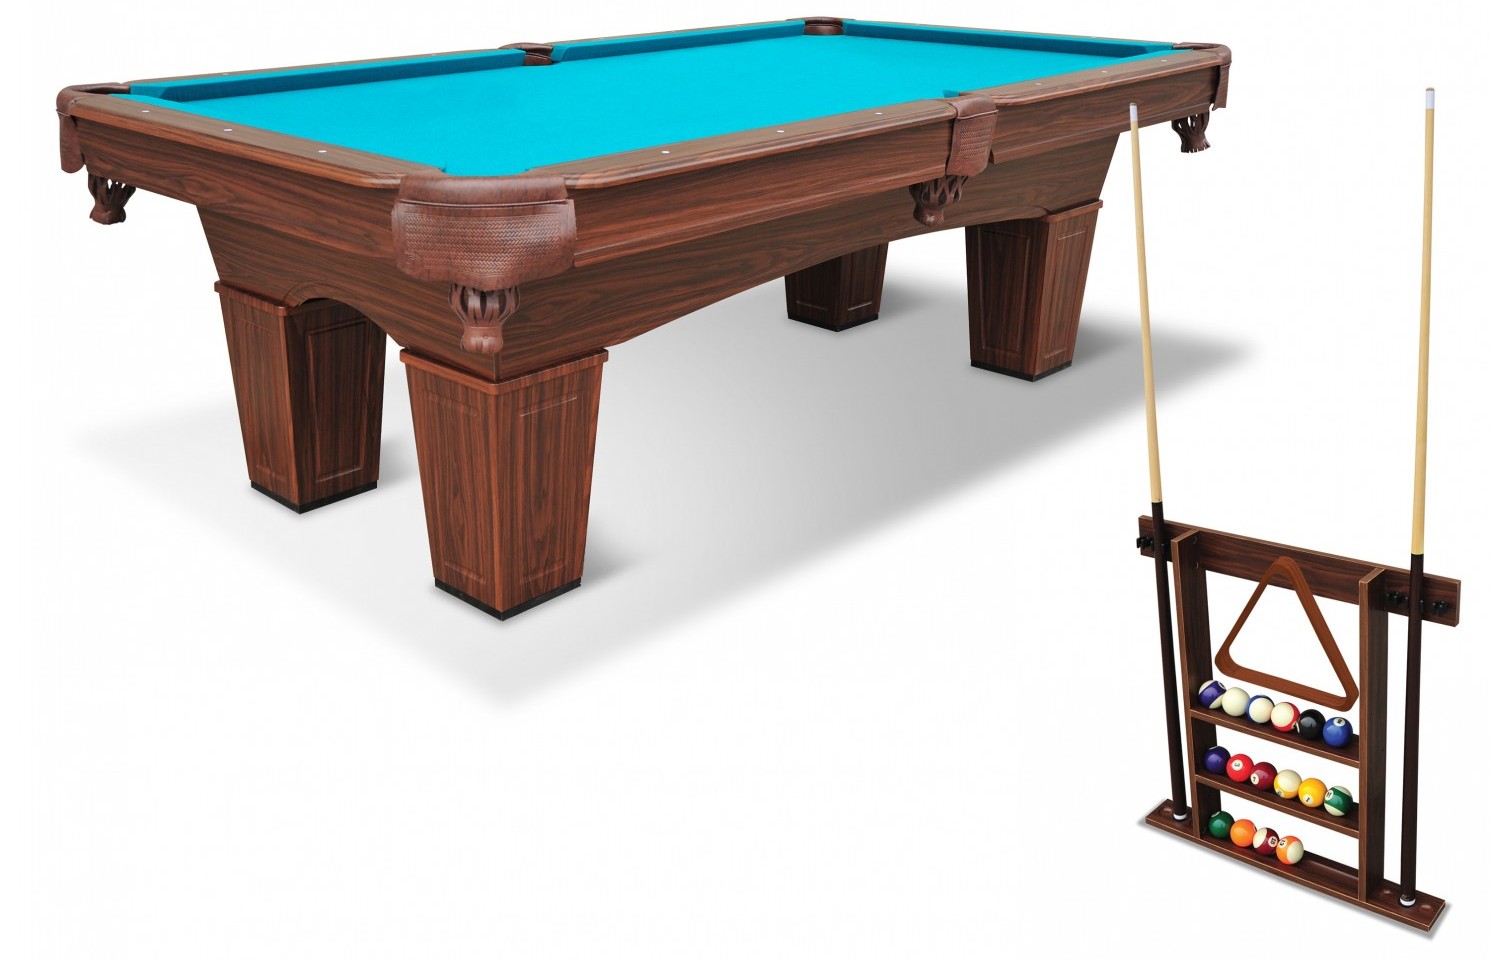 eastpoint sports chamberlain billiards table image